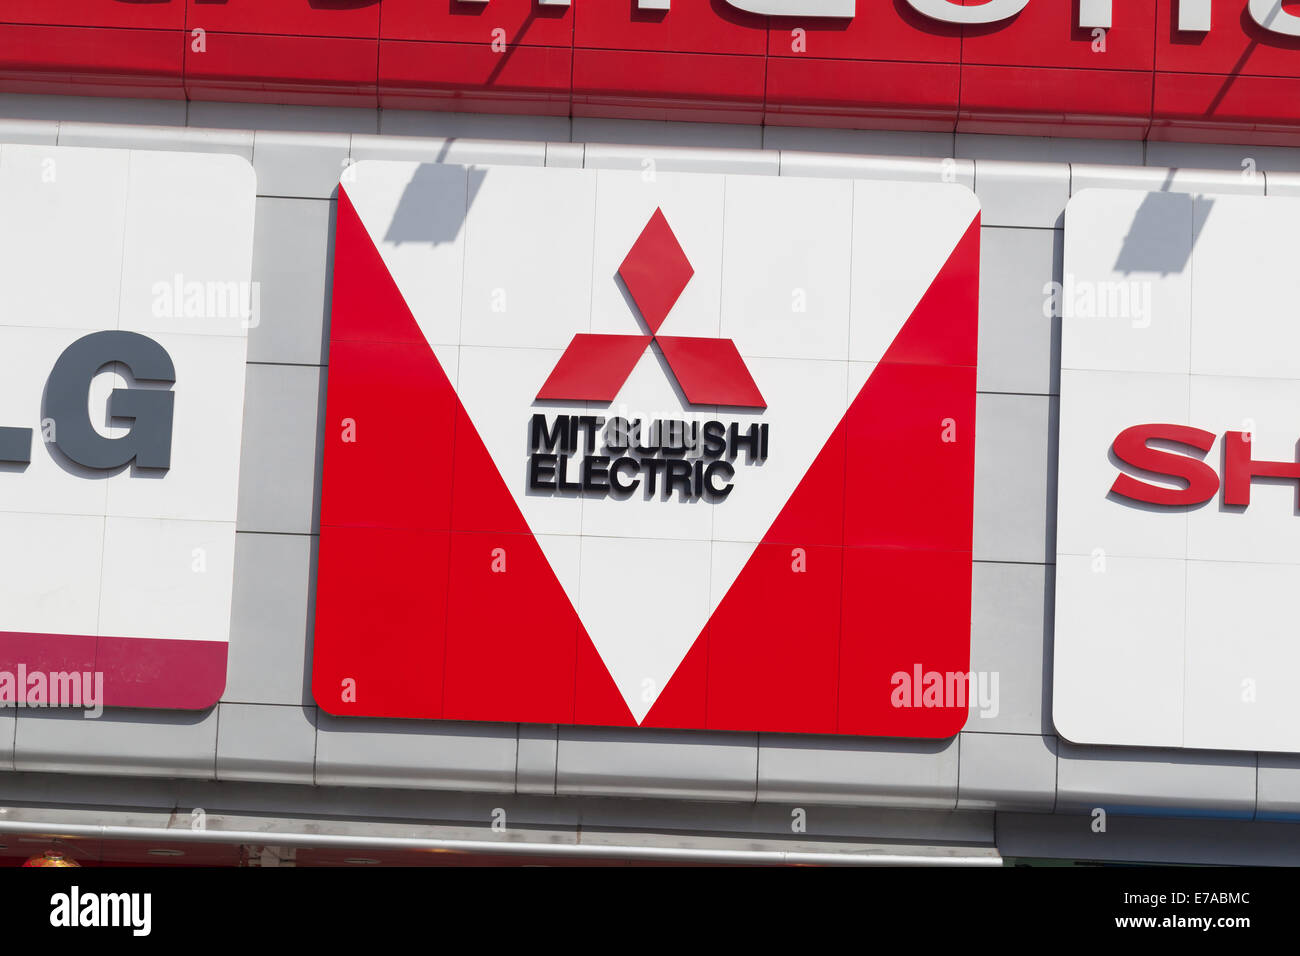 Mitsubishi Electric sign Banque D'Images